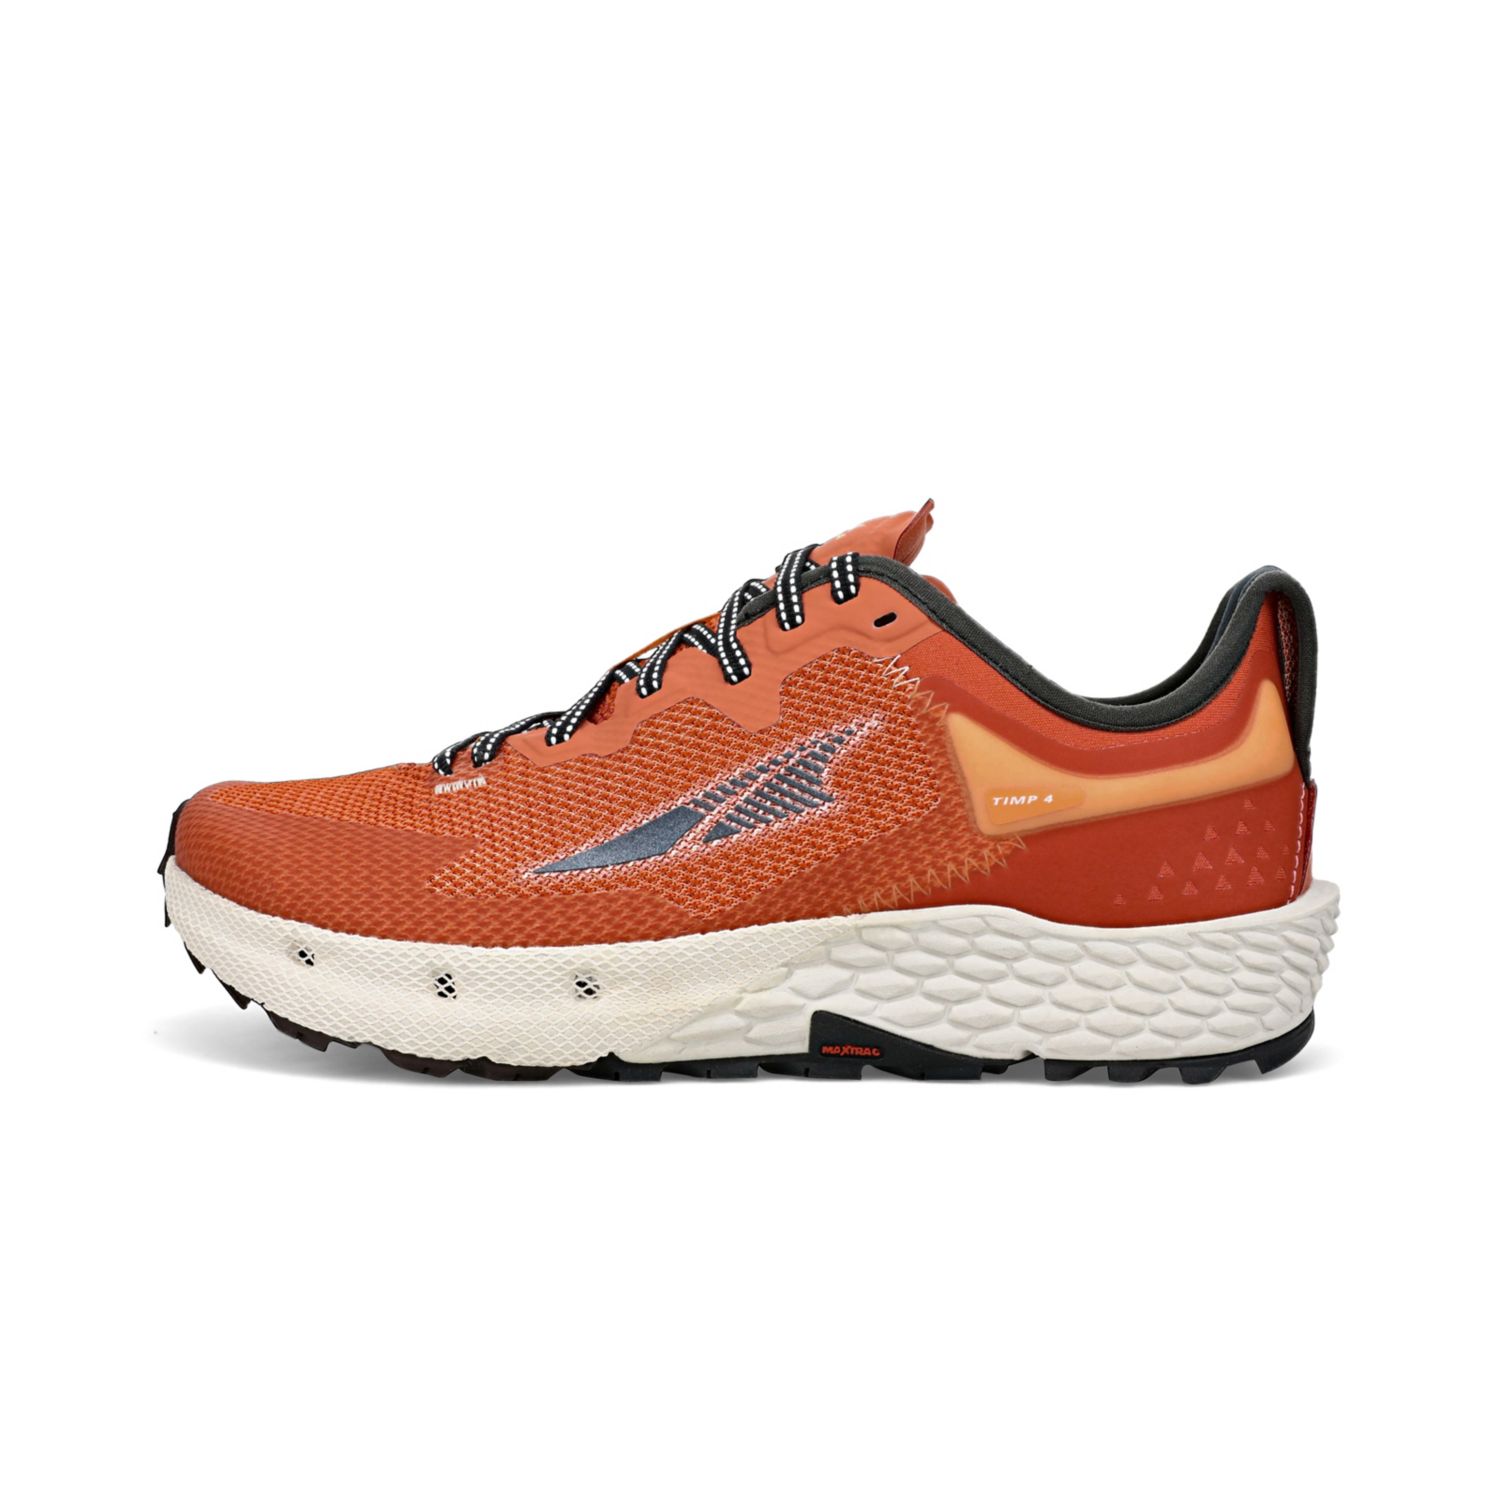 Red / Orange Altra Timp 4 Women's Trail Running Shoes | Ireland-18793469